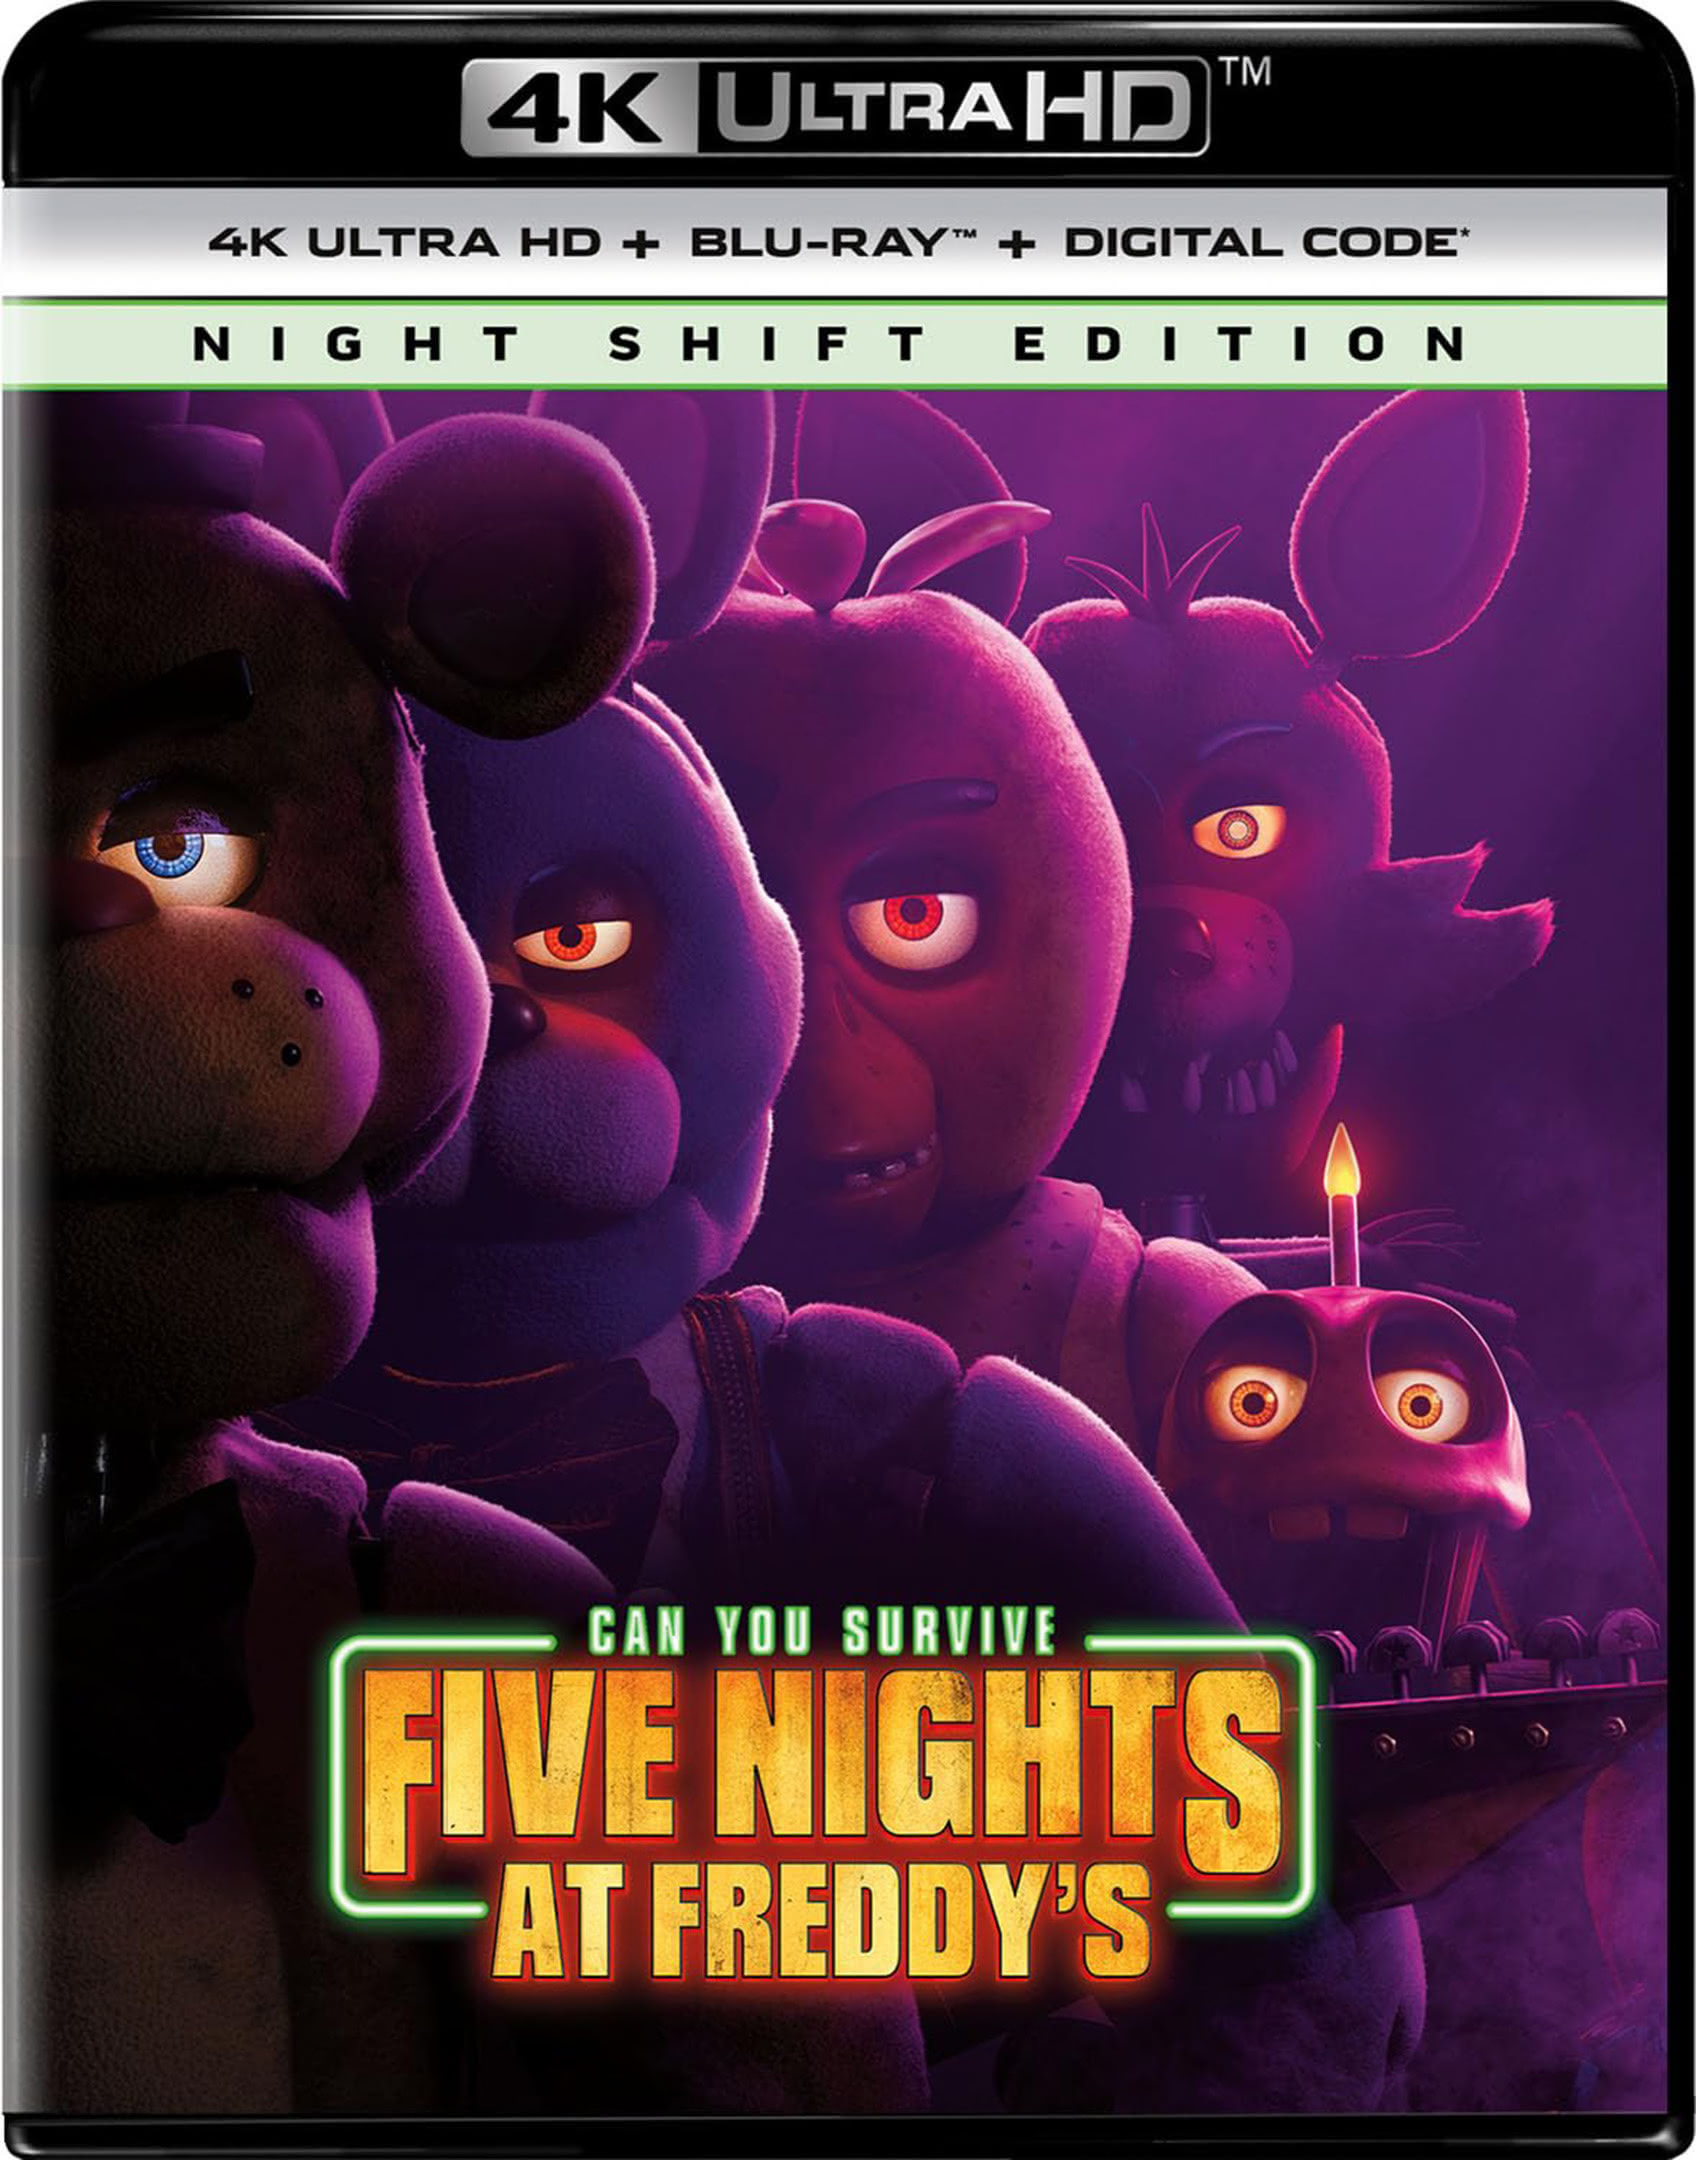 Five Nights At Freddy's – LAST FINAL TRAILER (2023) Universal